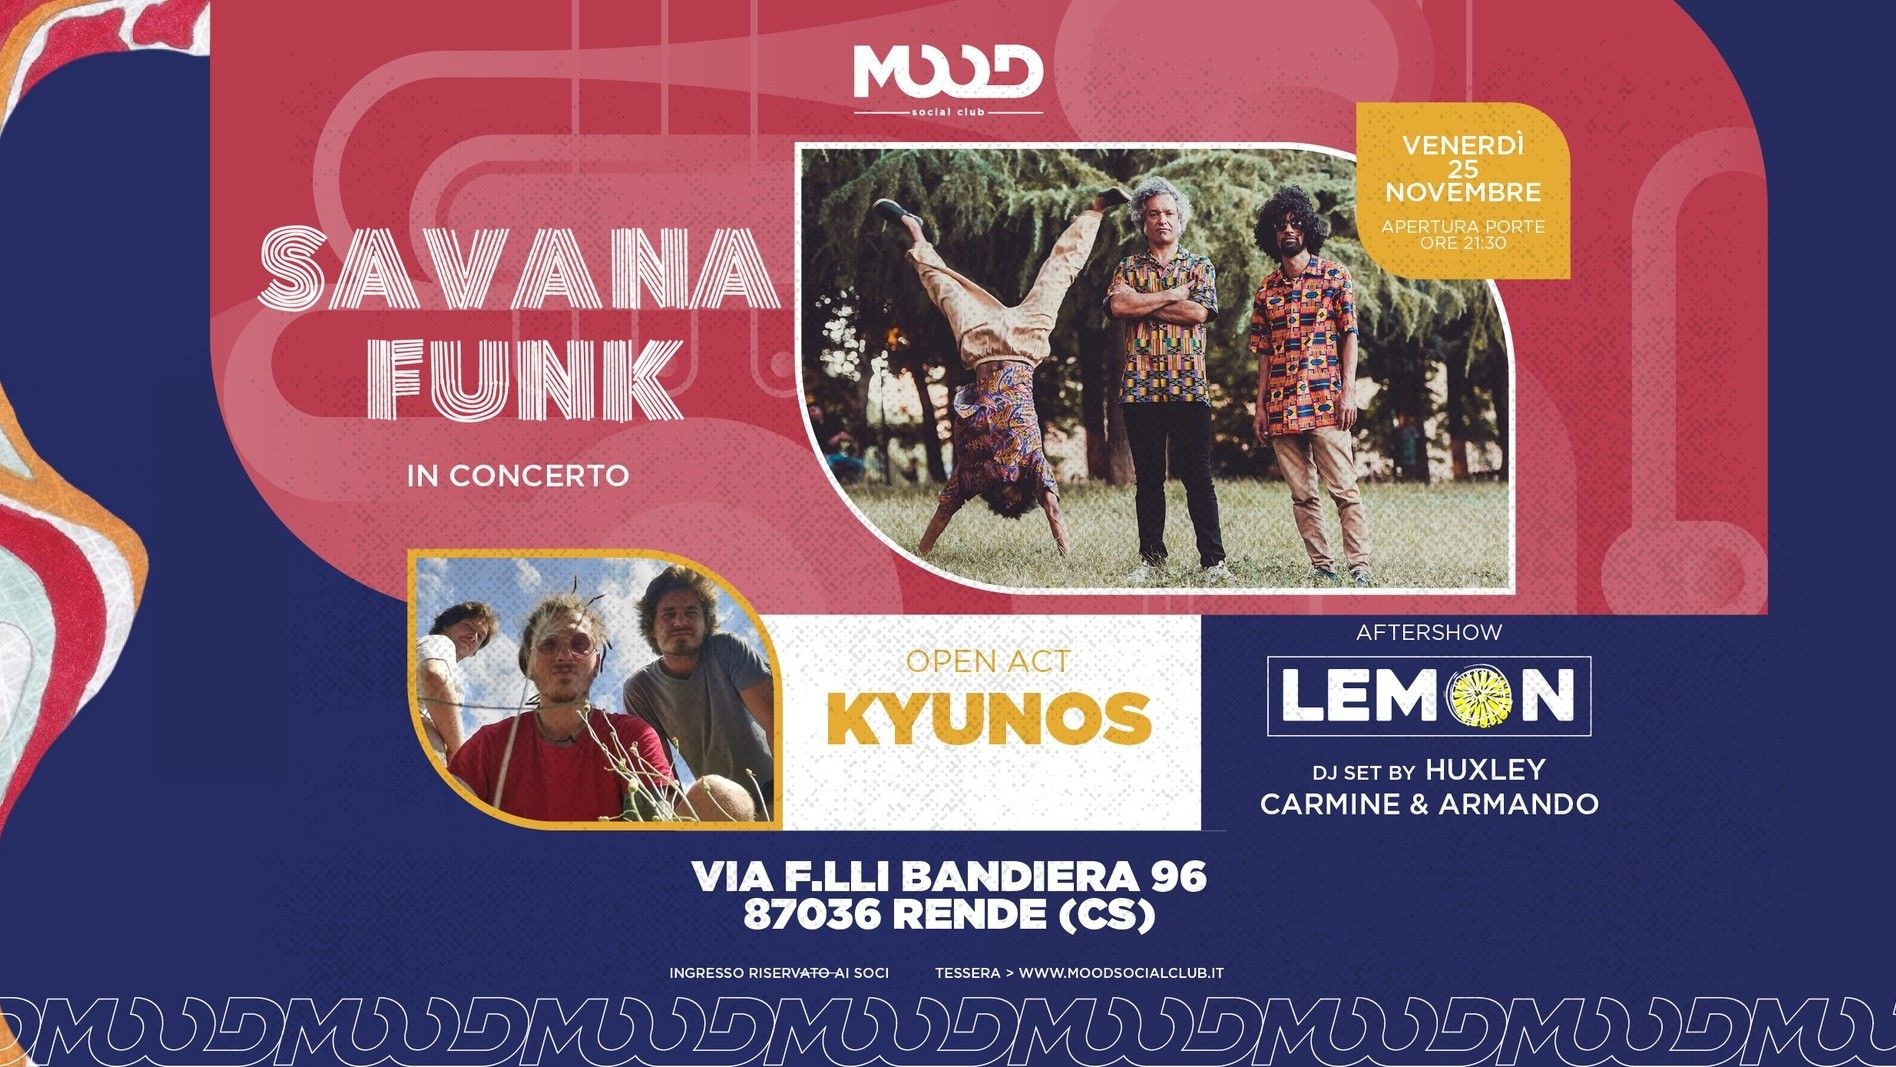 Savana Funk + Kyuons + Lemon Party